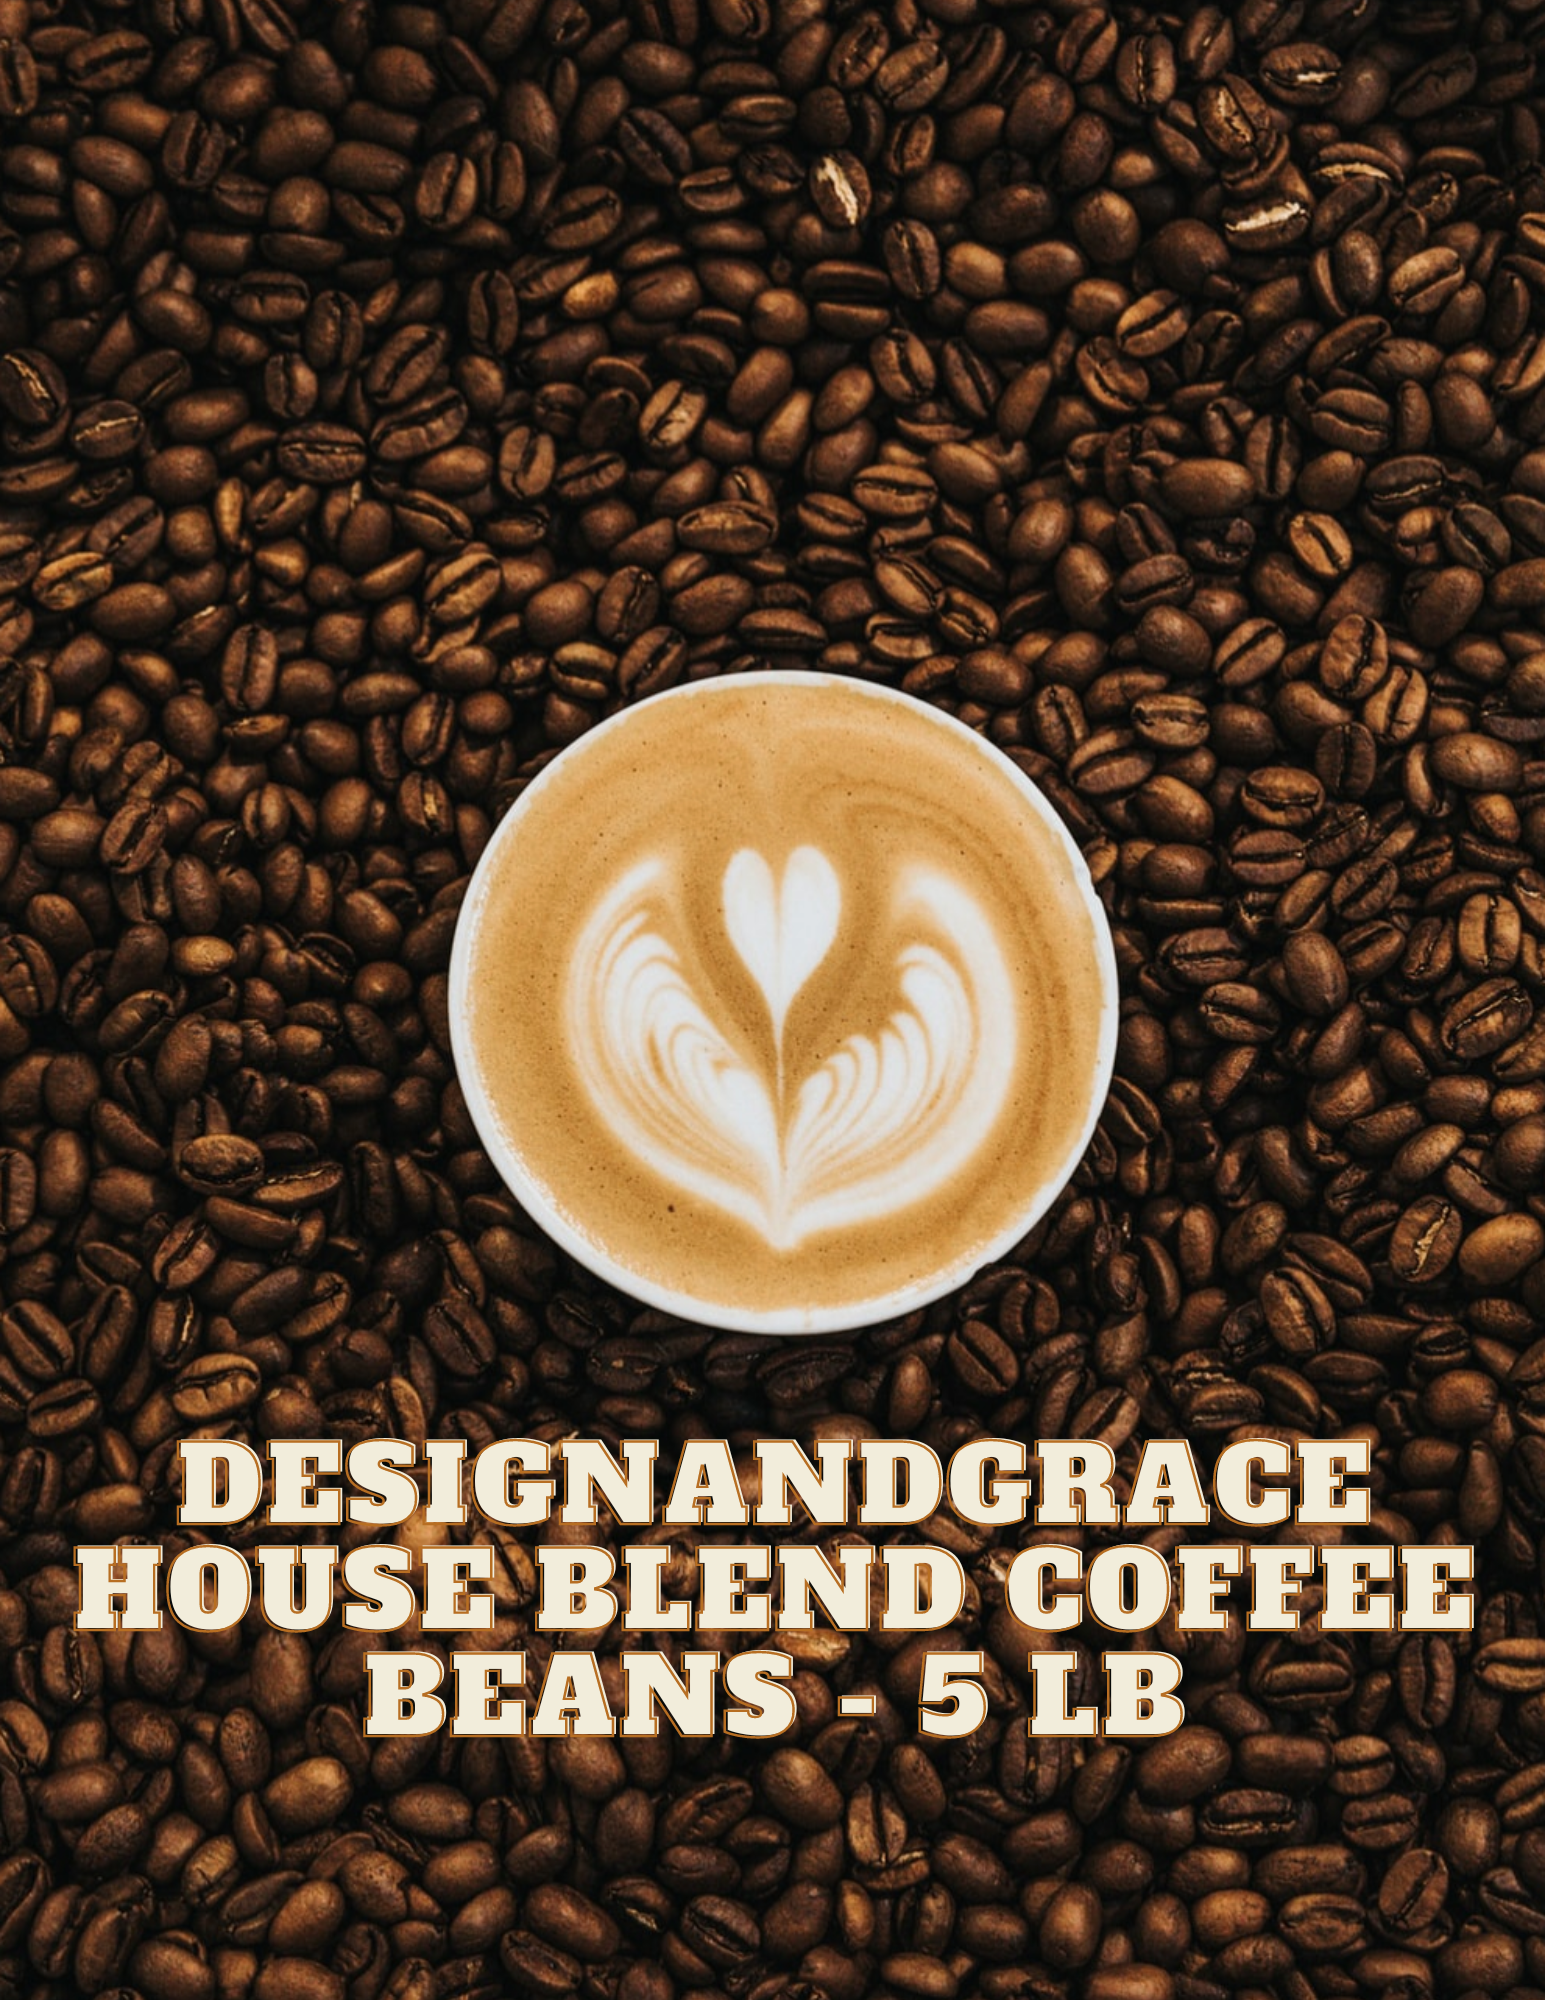 DesignandGrace House Blend Coffee Beans - 5 lb